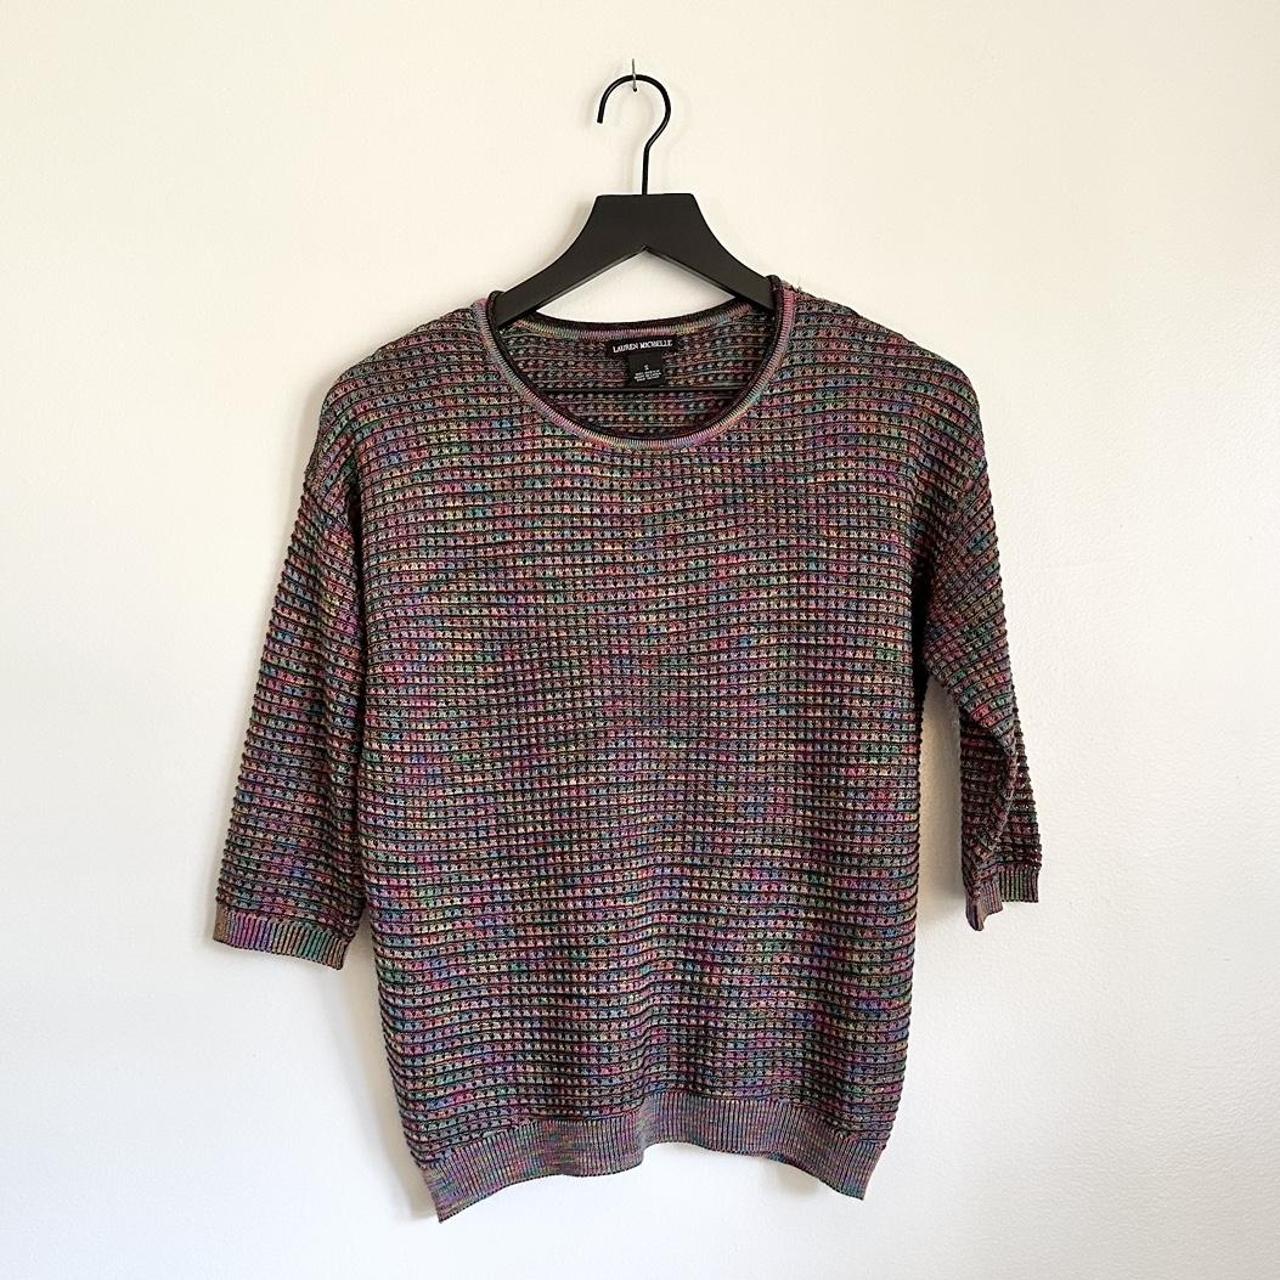 Subtle rainbow ultra light knit top/sweater with 3/4... - Depop